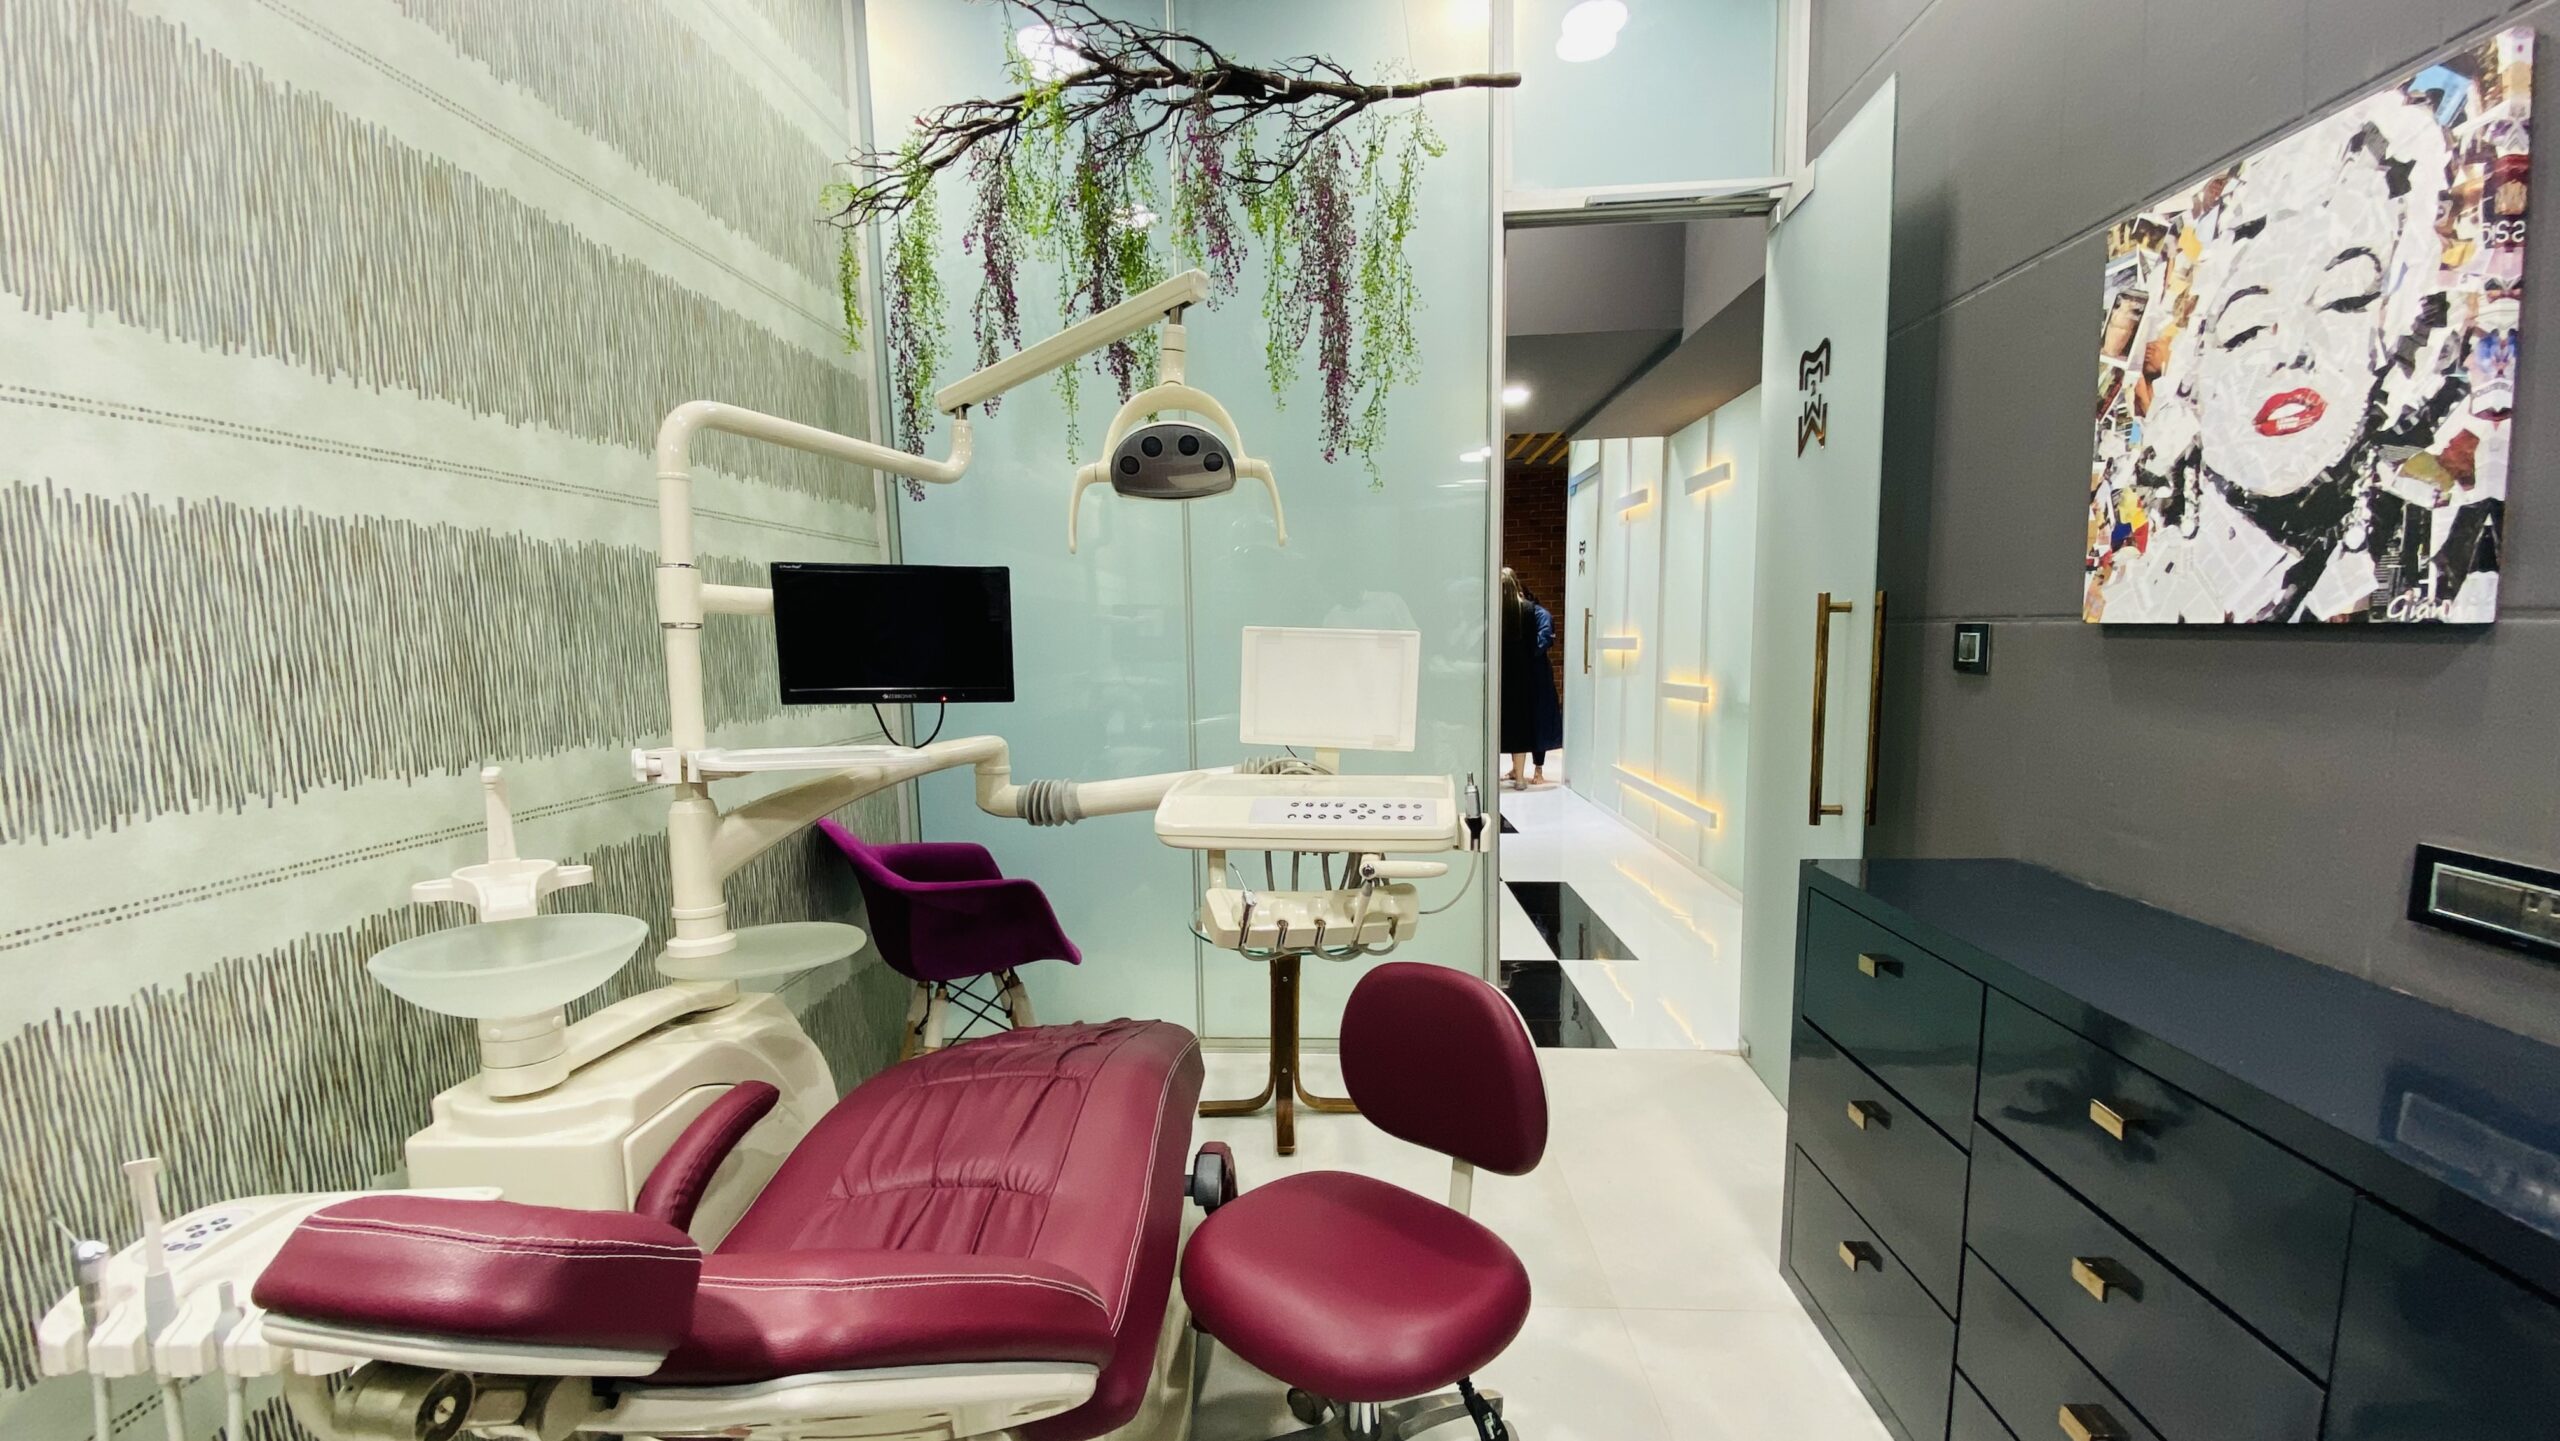 Operatory room 3 of Experteeth Dental Care